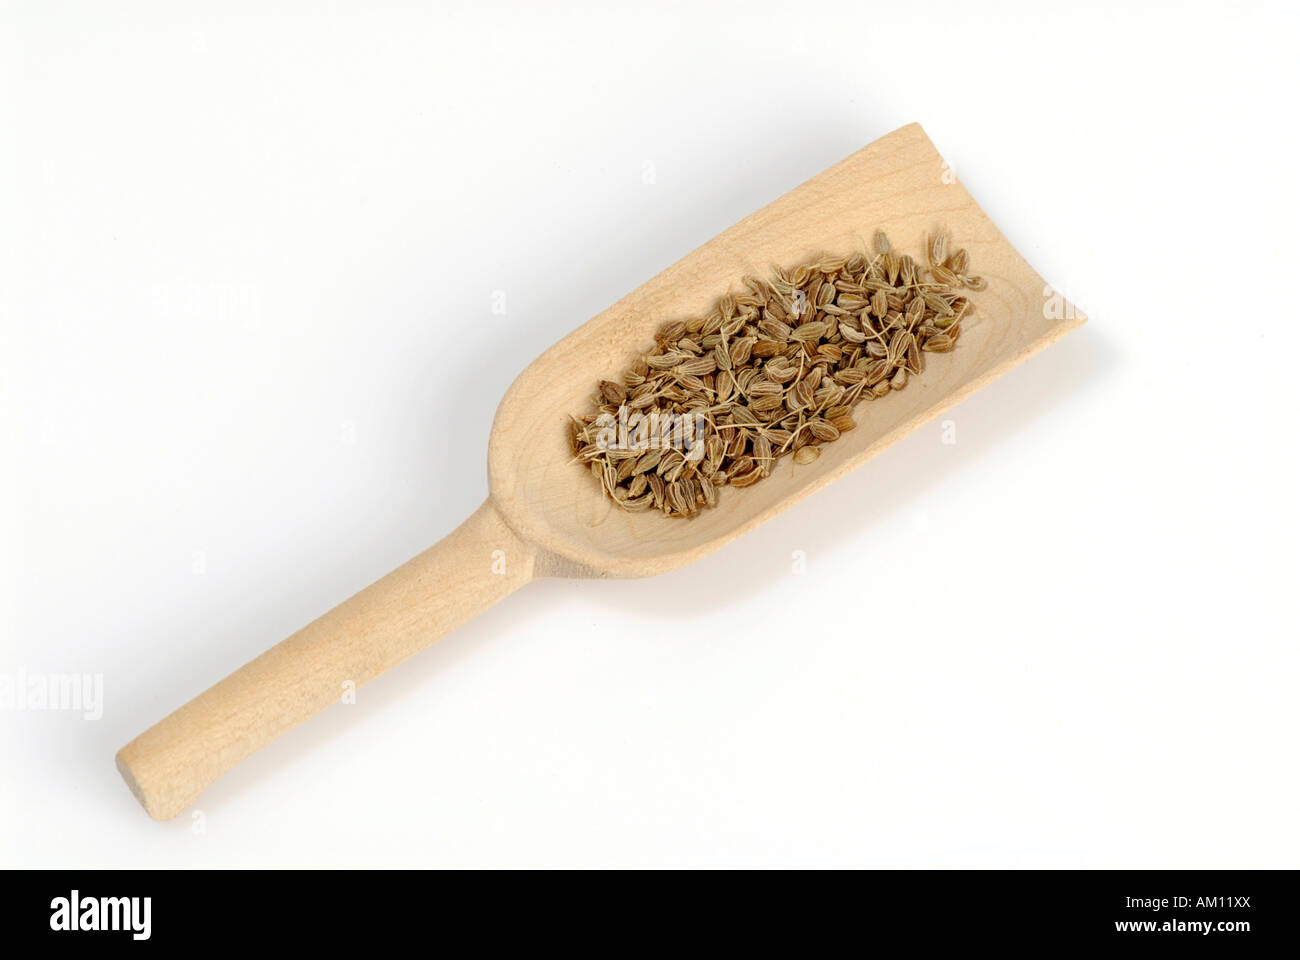 Anise on wooden scoop Stock Photo